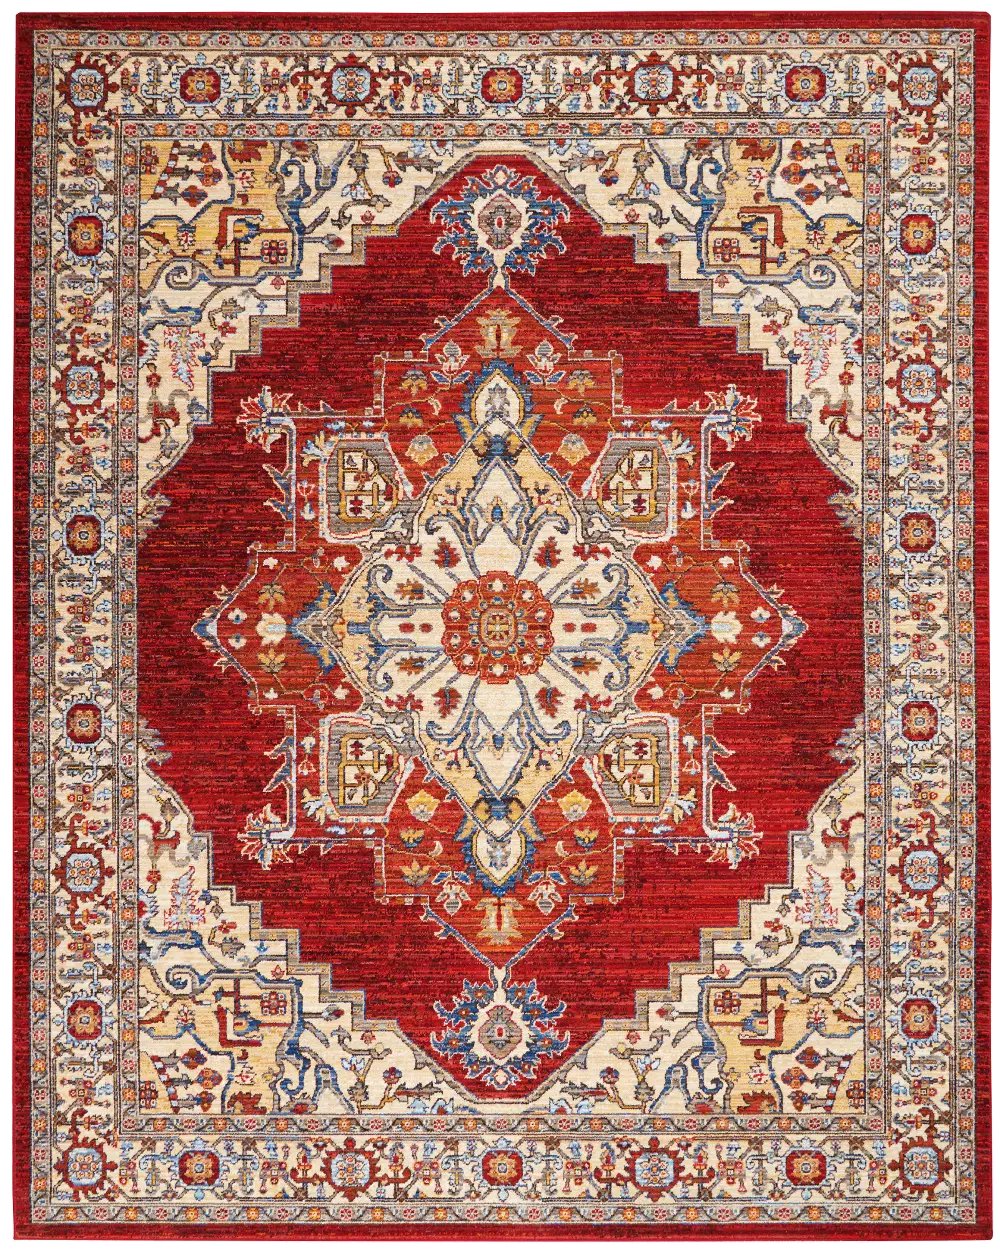 5 x 8 Medium Persian Red Area Rug - Majestic-1